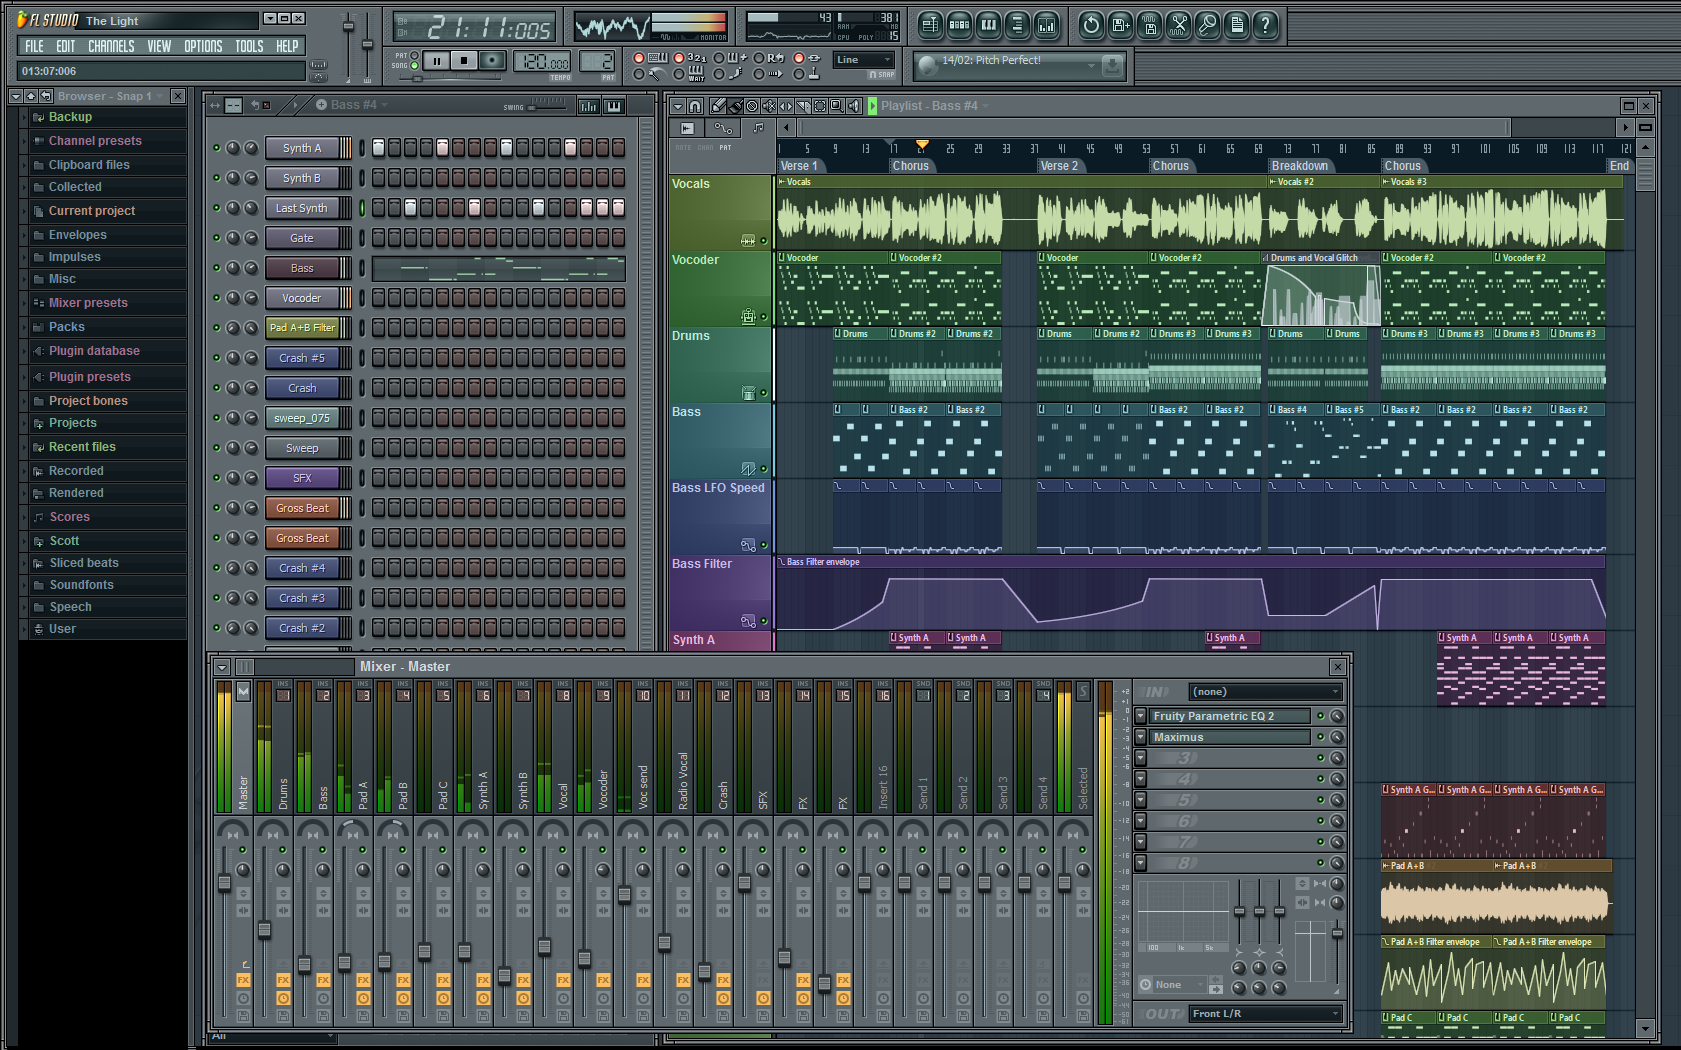 FL Studio 11